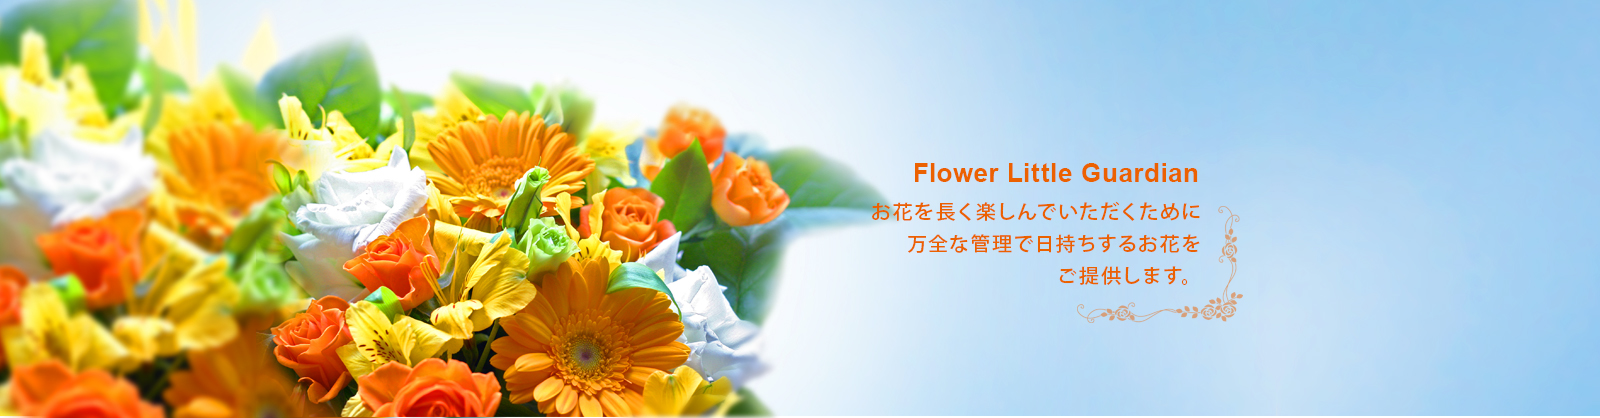 Flower Little Guardian お花を長く楽しんでいただくために万全な管理で日持ちするお花をご提供します。